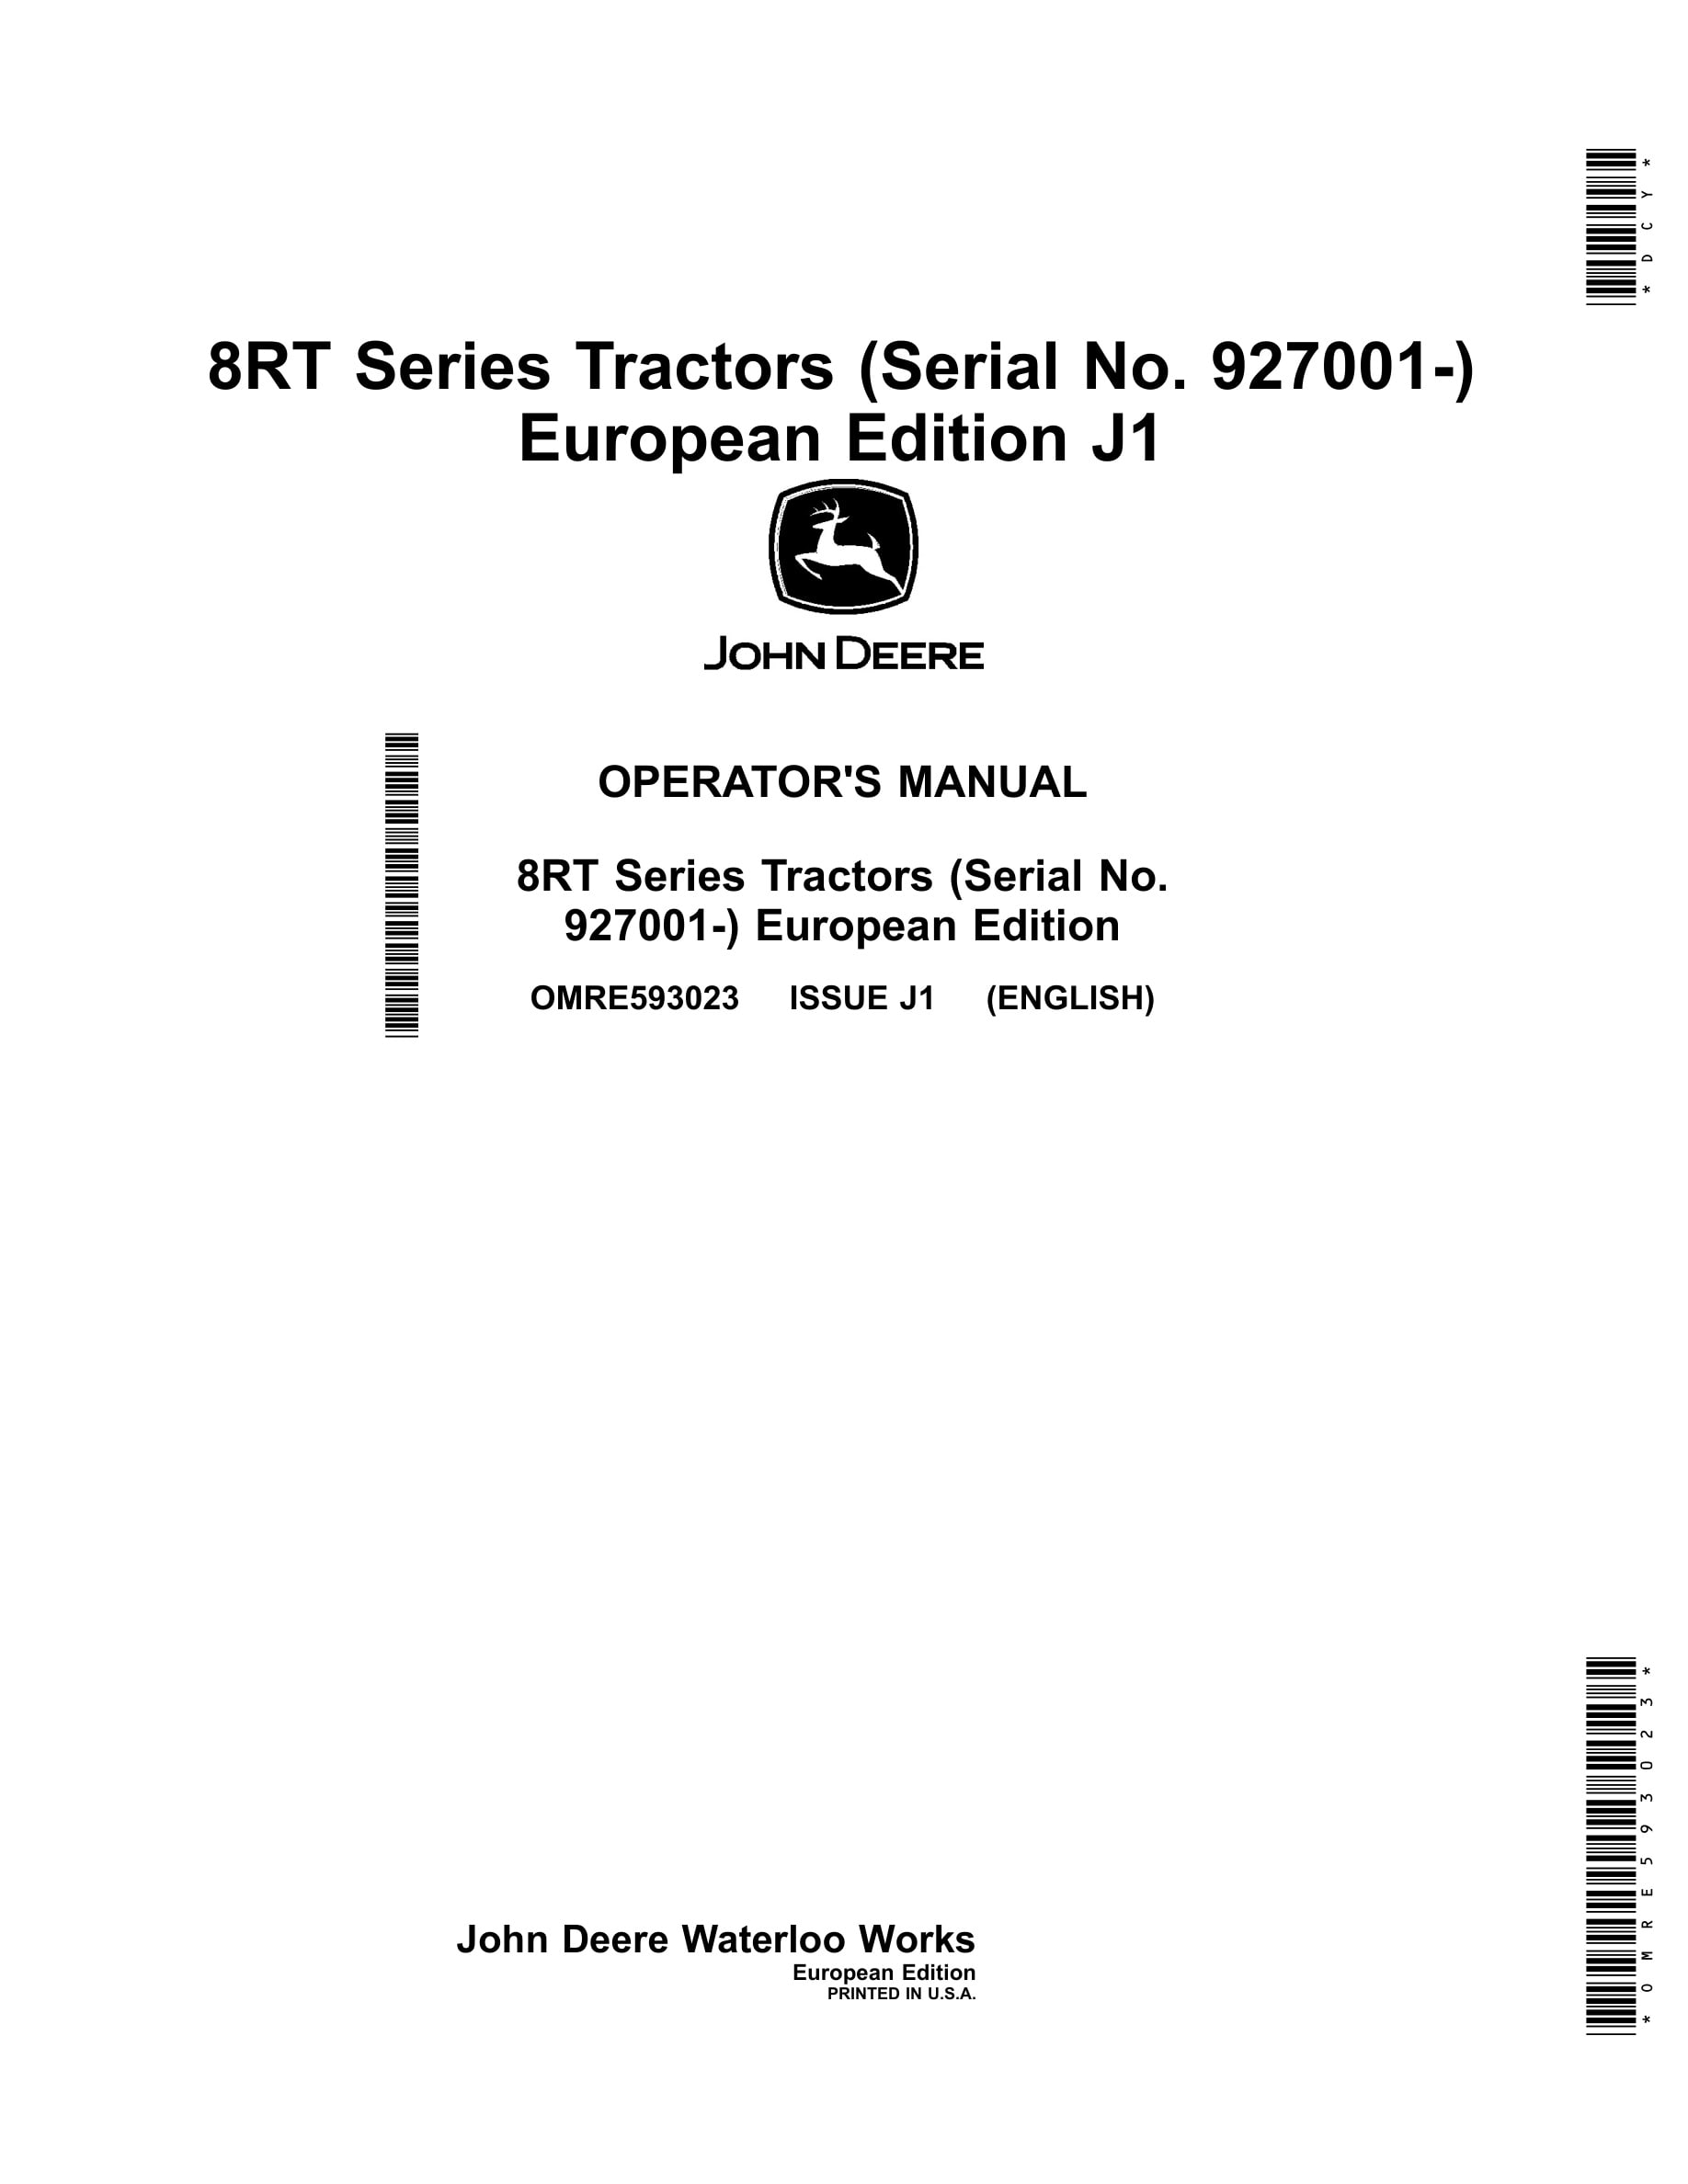 John Deere 8rt Series Tractors Operator Manuals OMRE593023-1